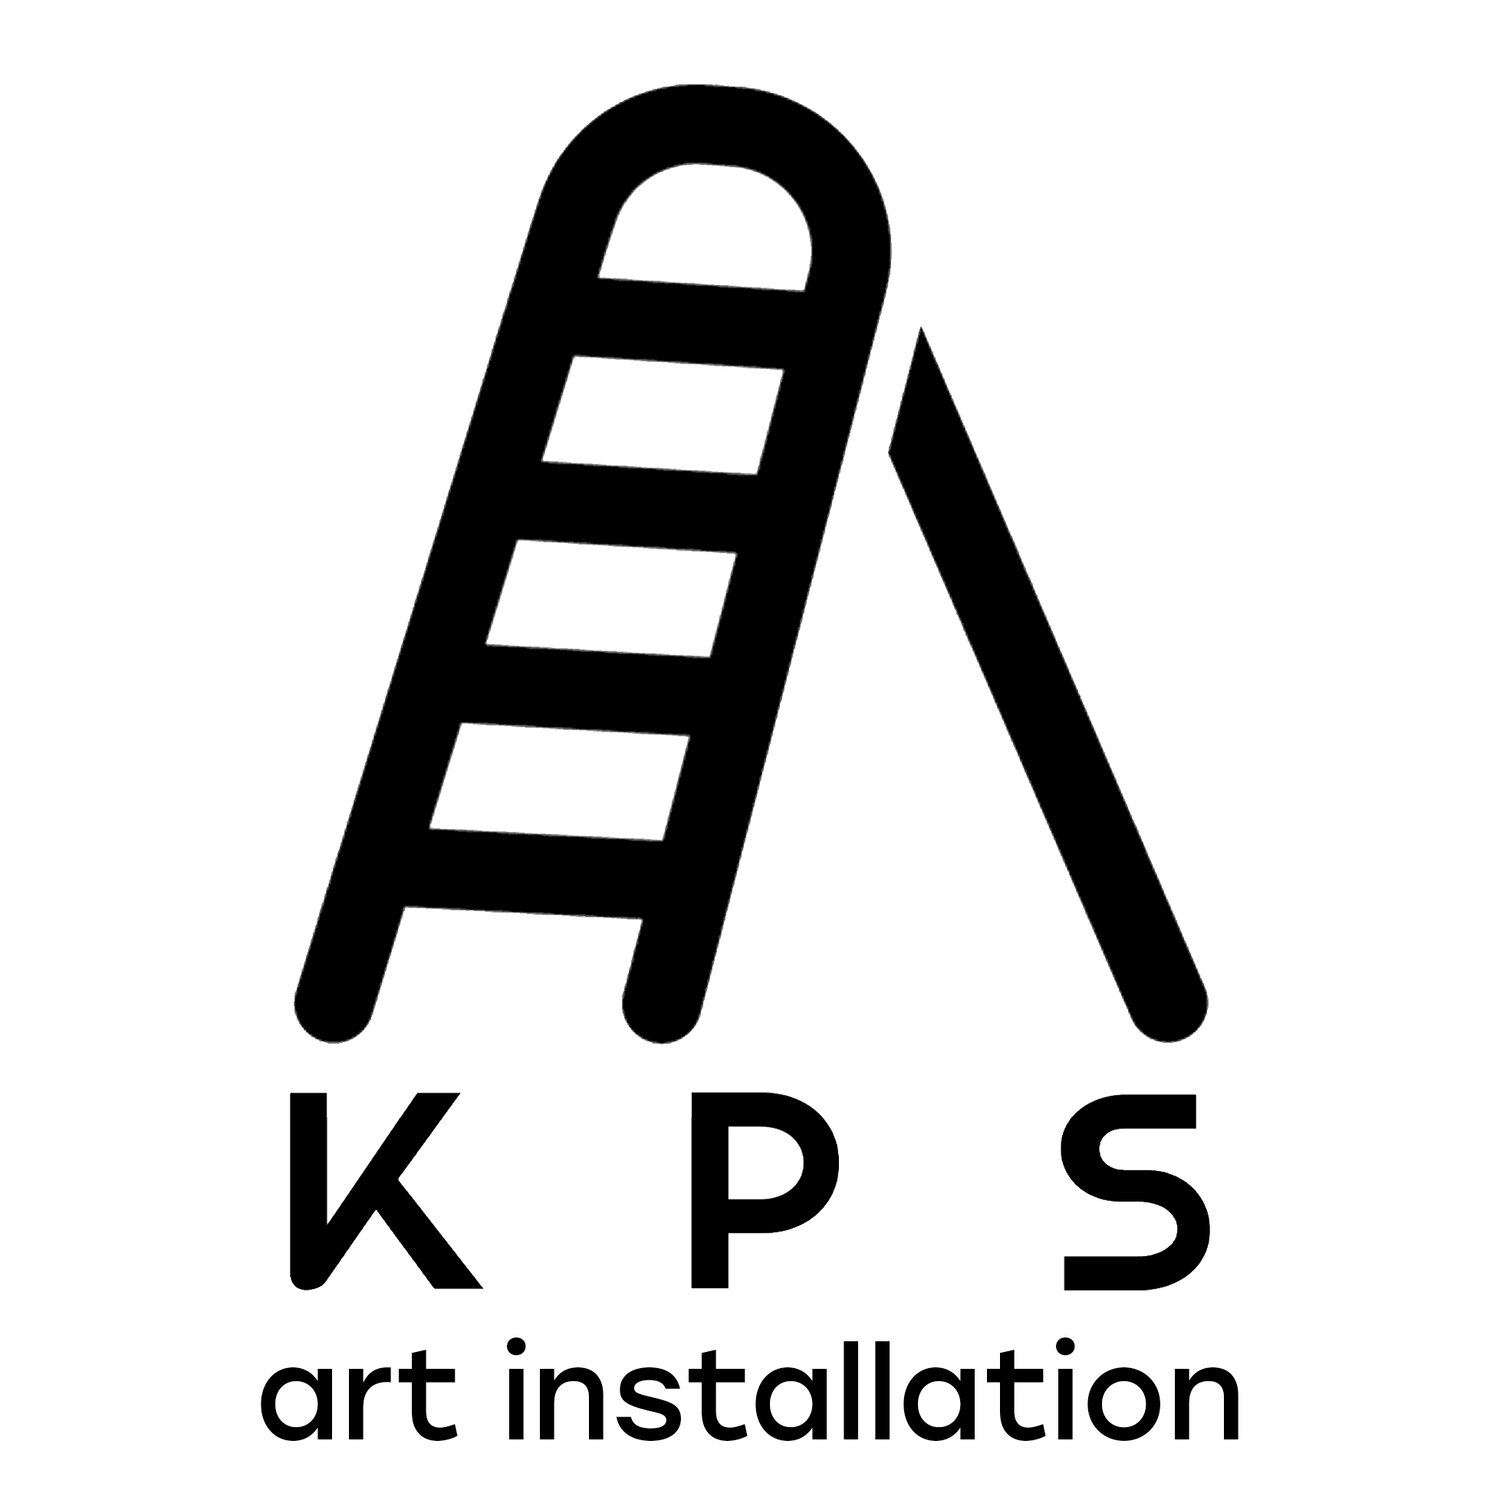 KPS art installation